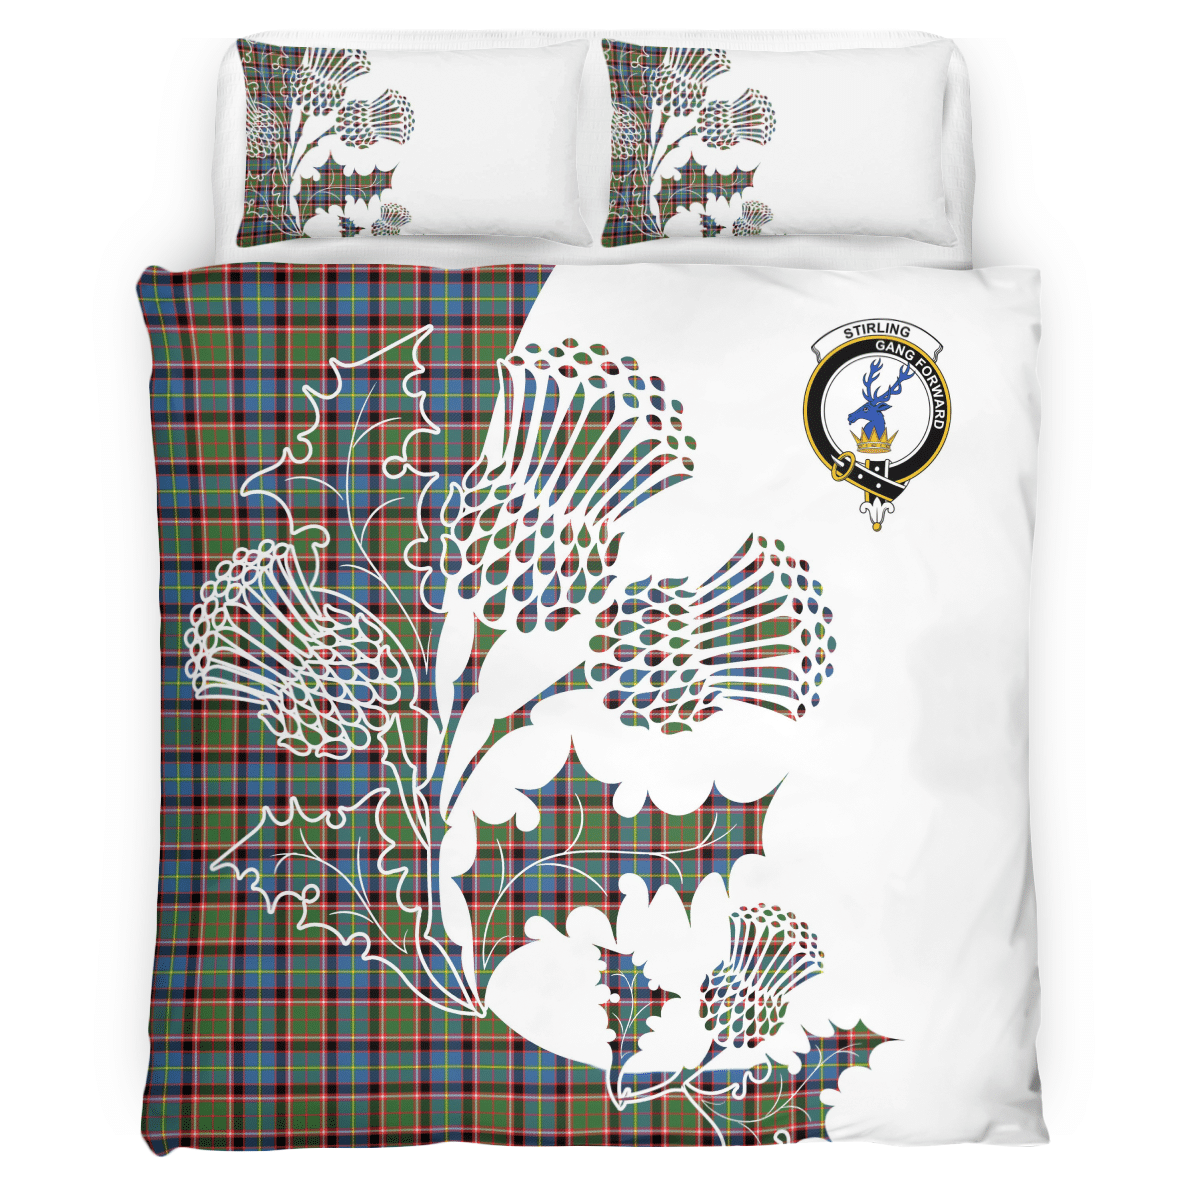 Stirling (of Cadder-Present Chief) Tartan Crest Bedding Set - Thistle Style